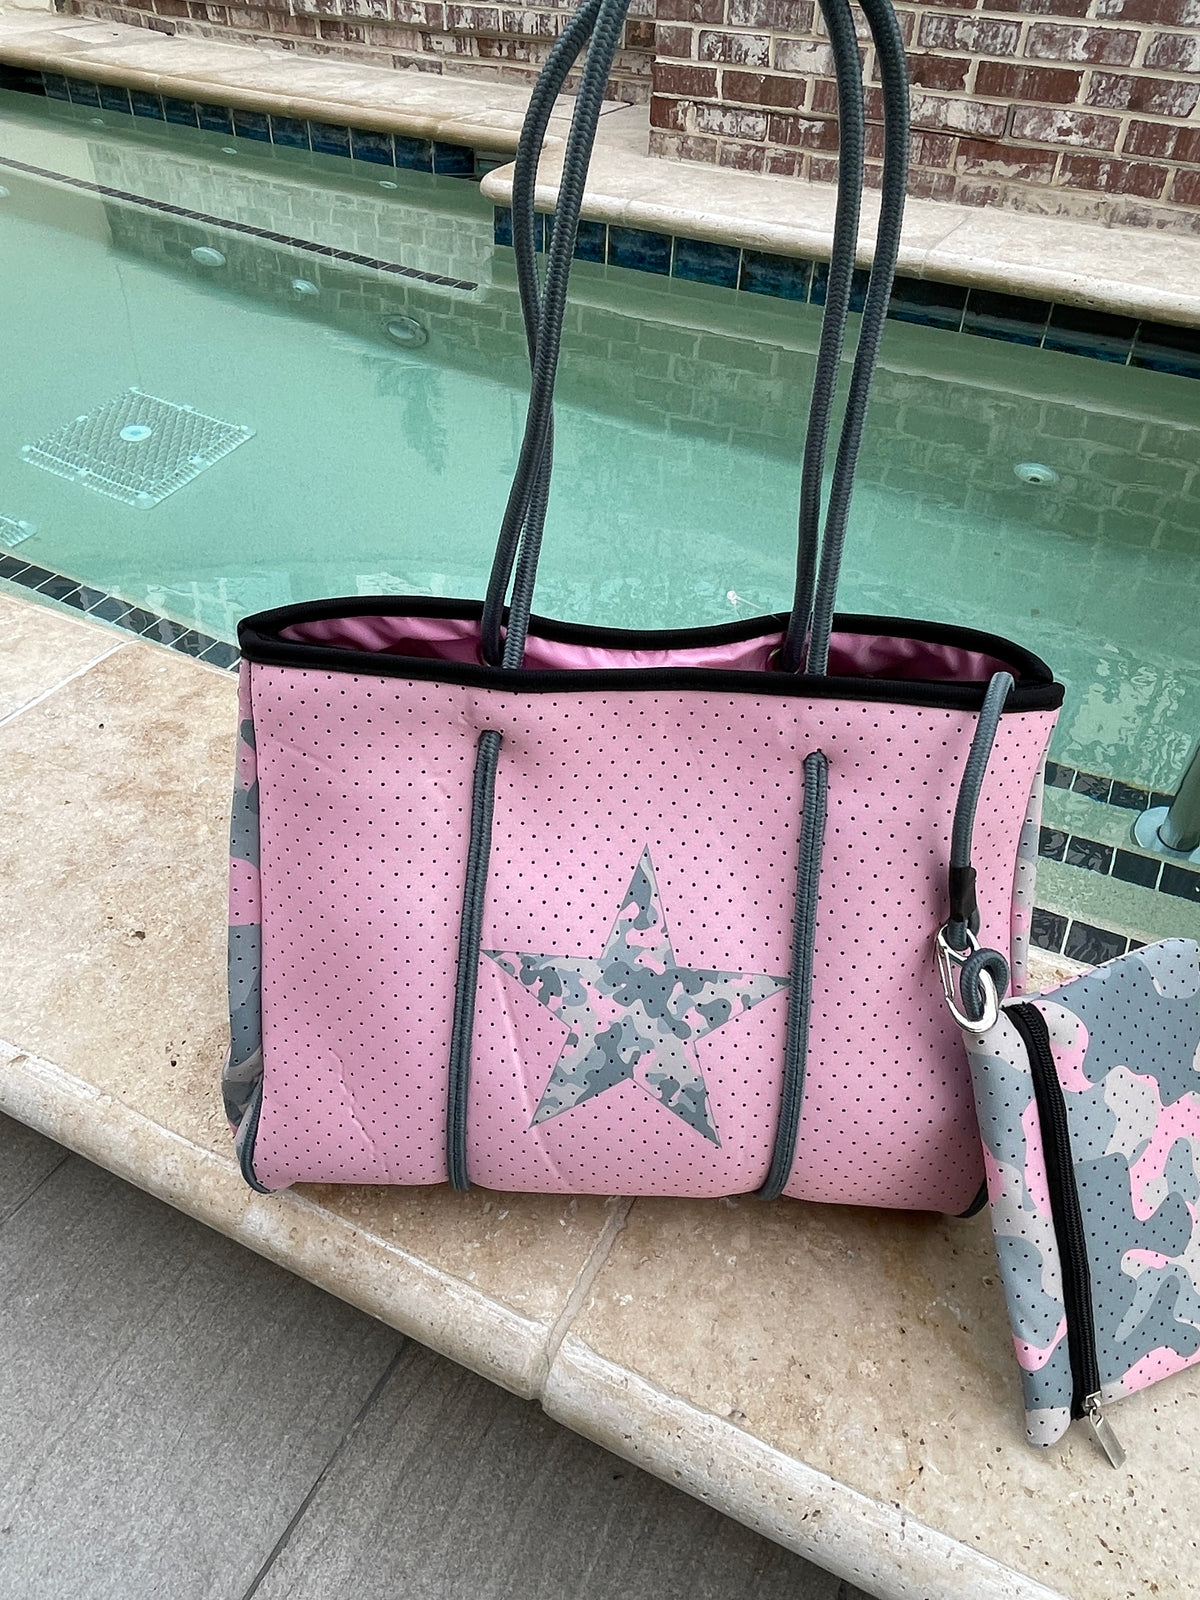 Neoprene Tote Bag Pink Star